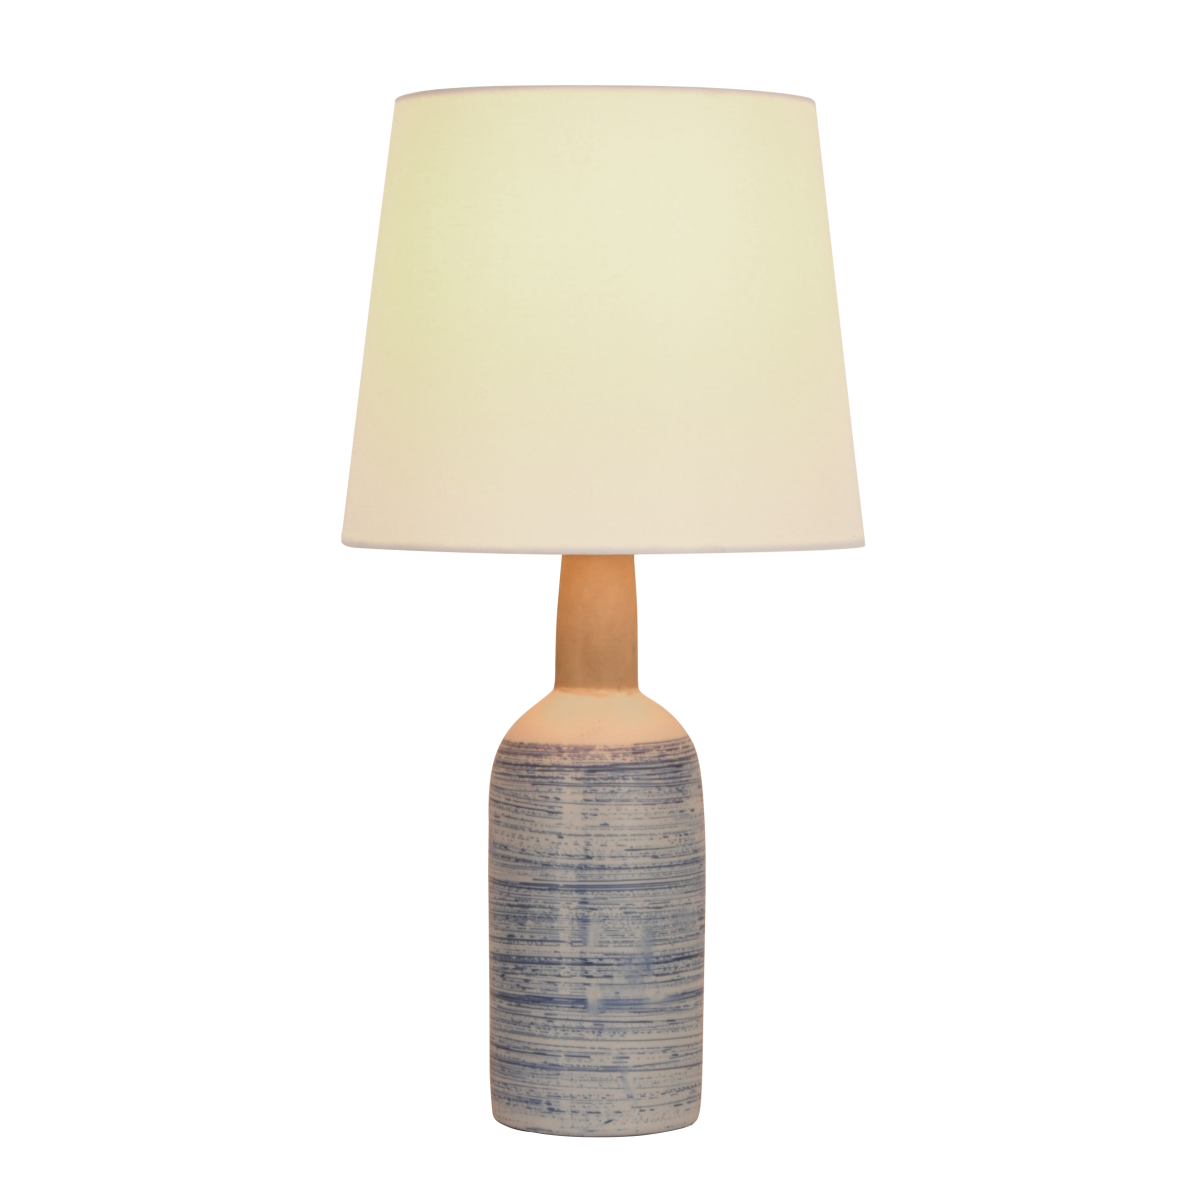 Ceramic table lamp "SEA".